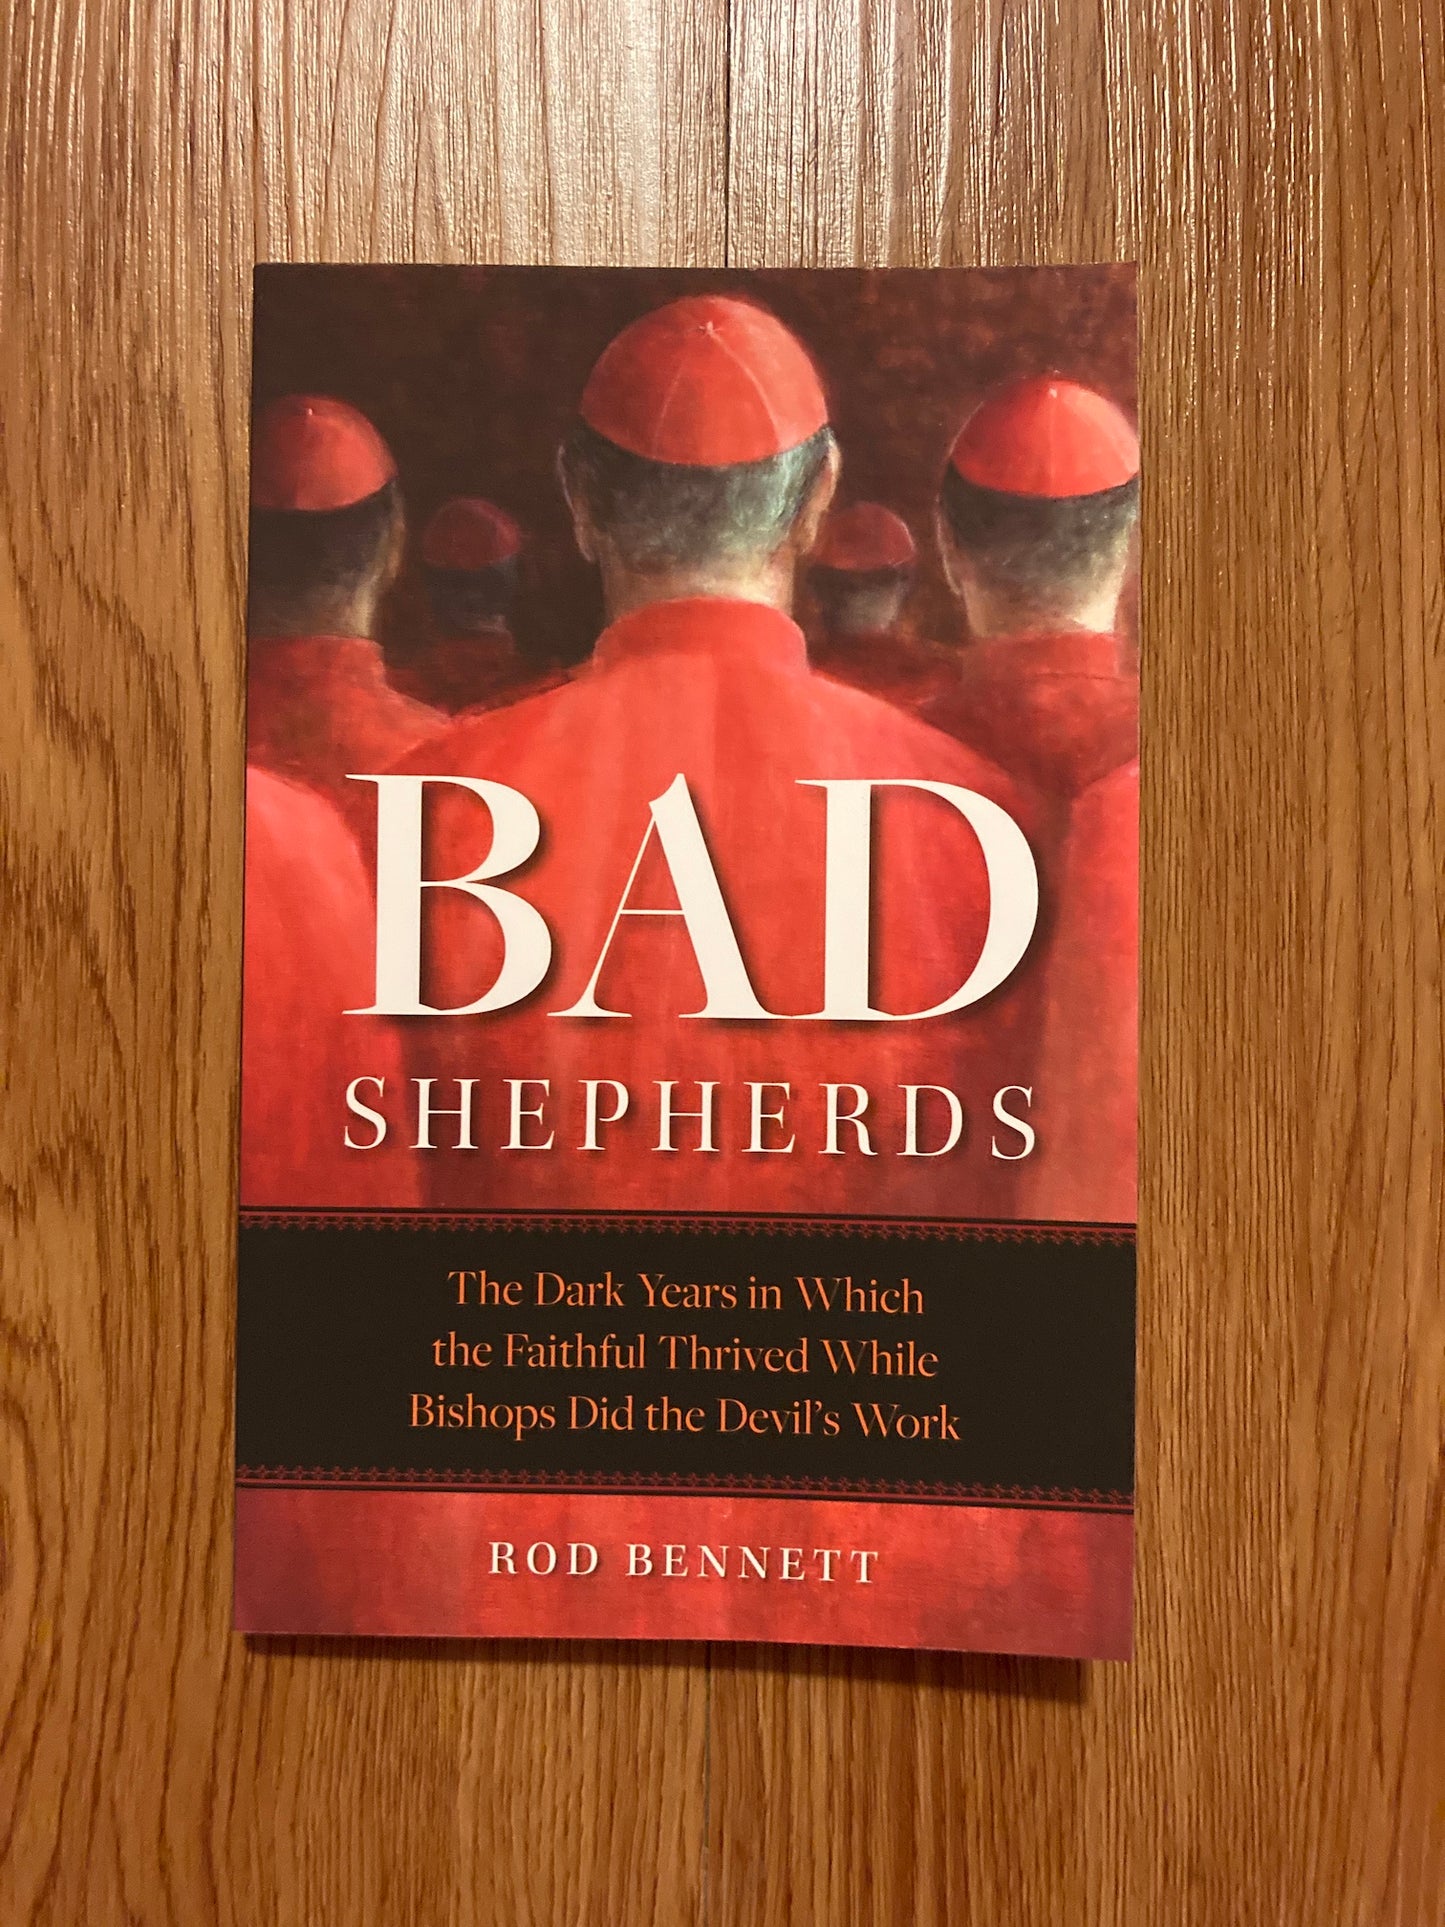 The Bad Shepherds: The Dark Years, by Rod Bennett